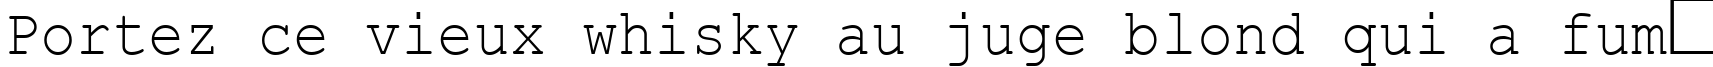 Пример написания шрифтом Courier New Cyr_90n текста на французском